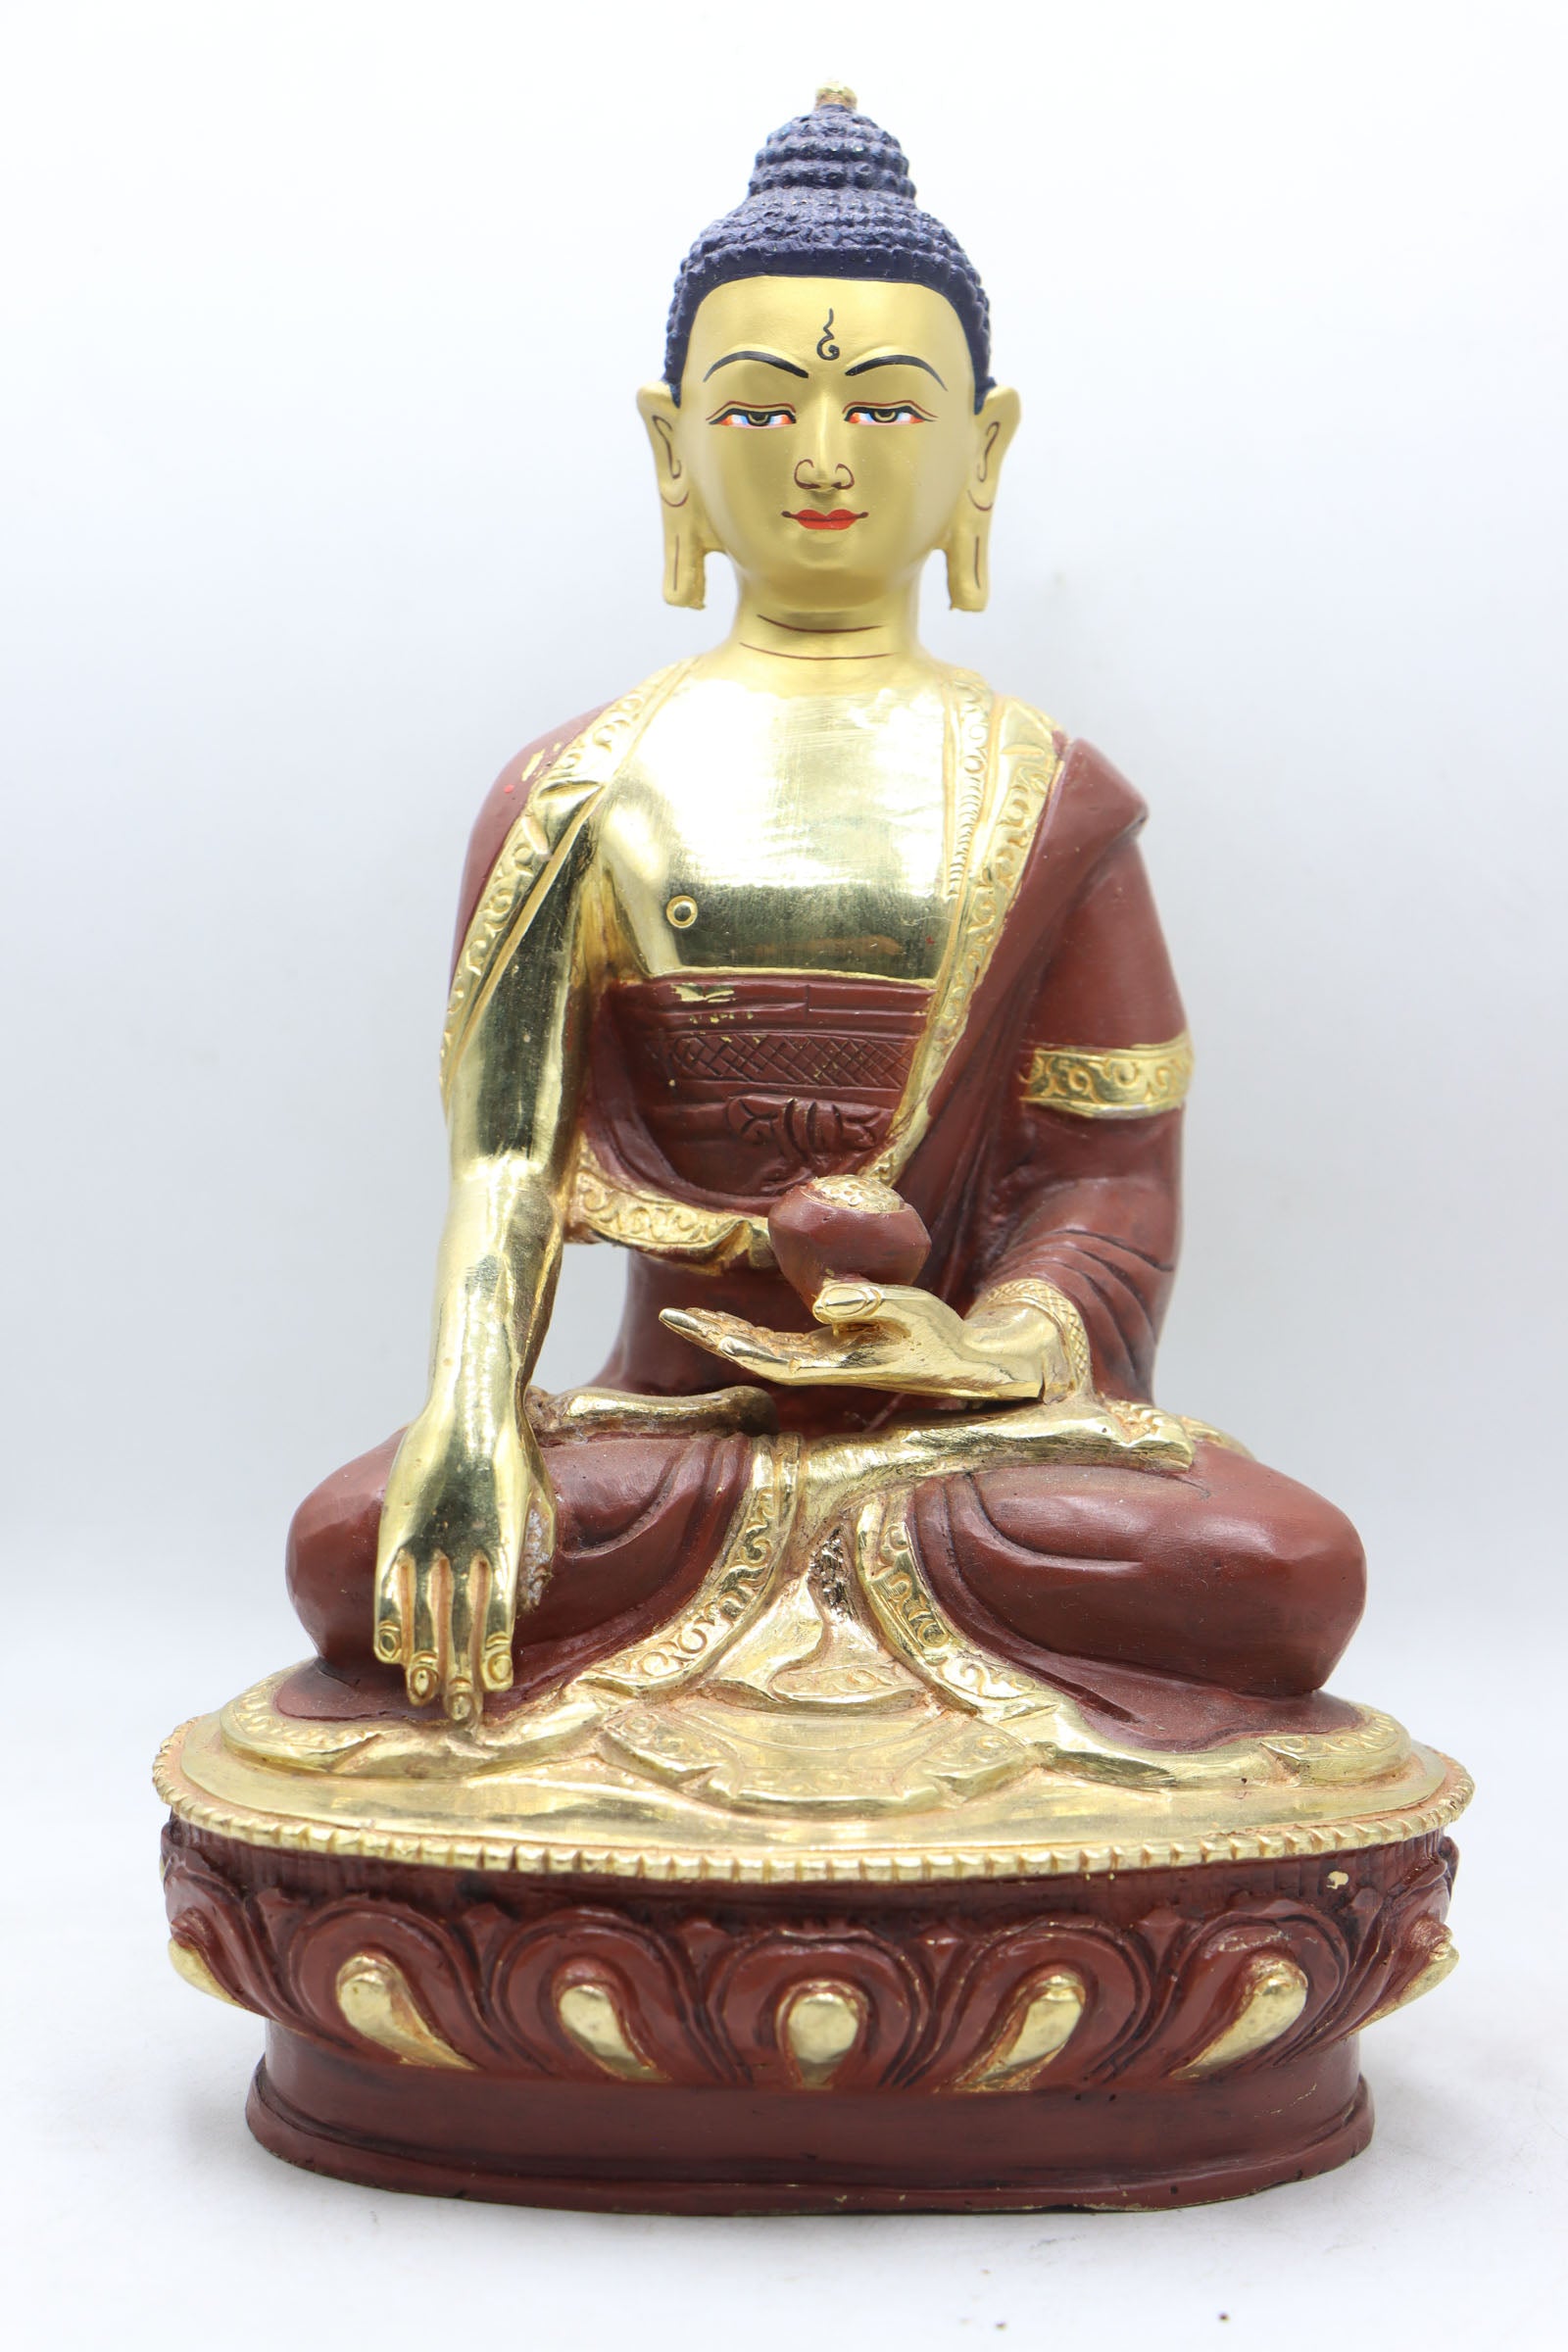 Shakyamuni Buddha statues  serves as objects of reverence and inspiration. 